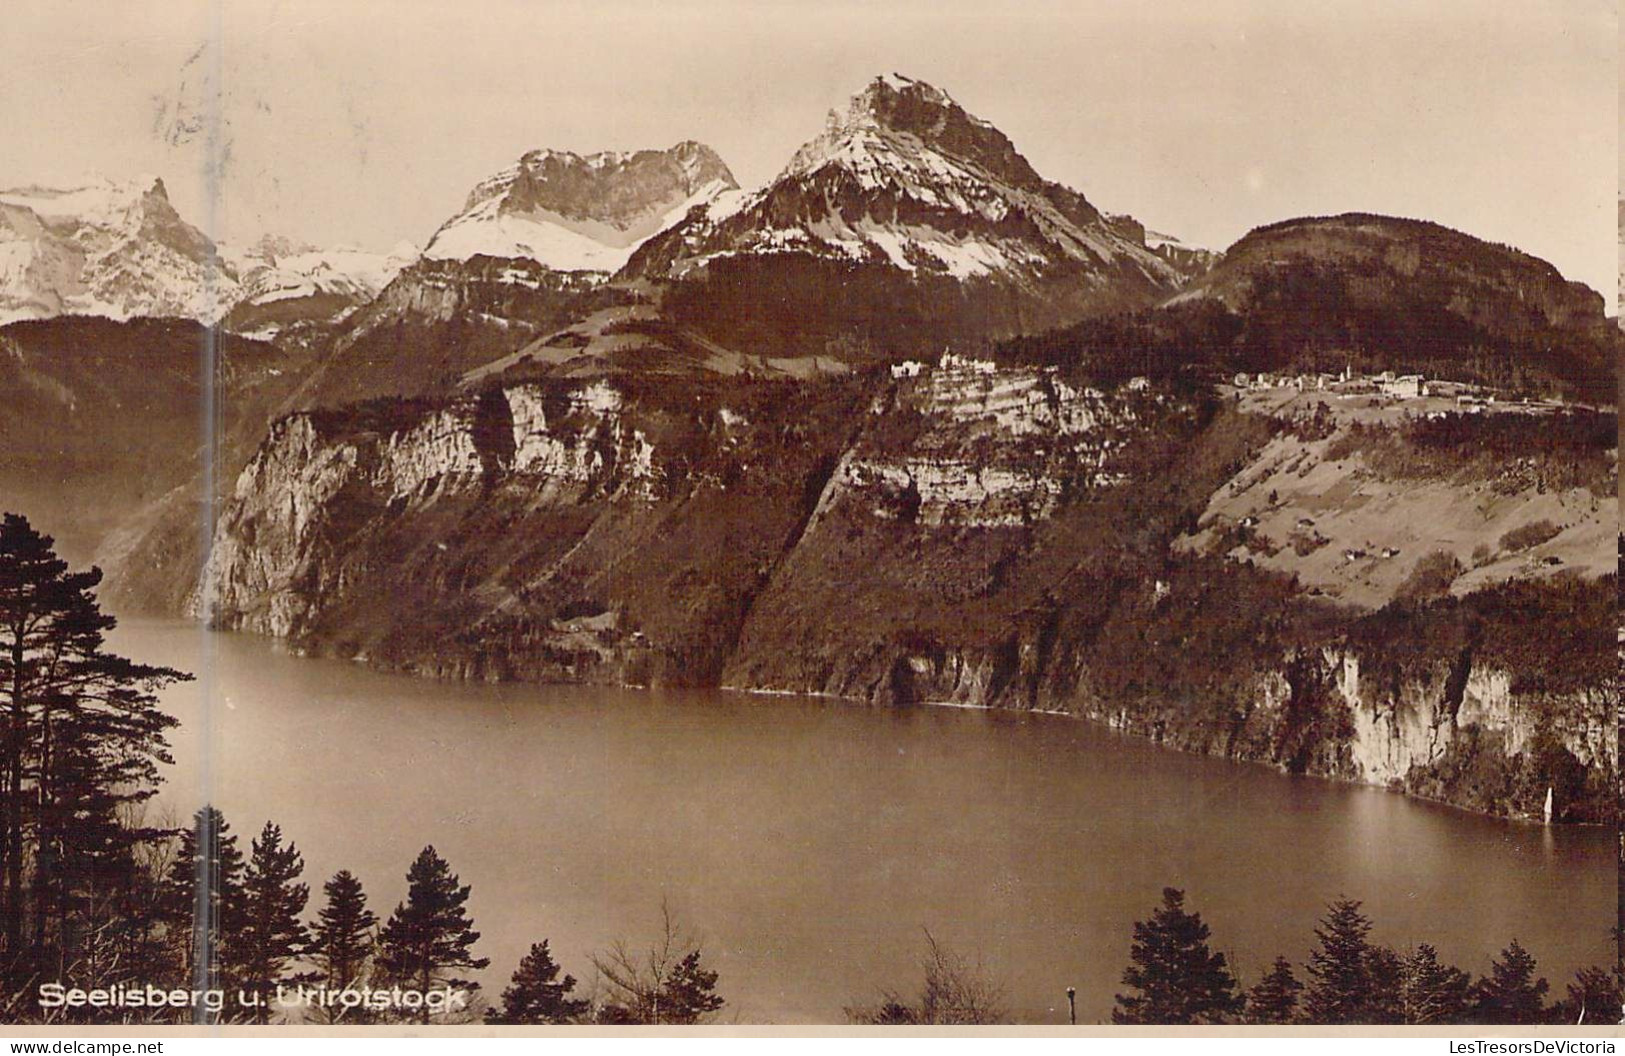 SUISSE - Seelisberg U Urirotstock - Edition Photoglob Zurich - Carte Postale Ancienne - Berg